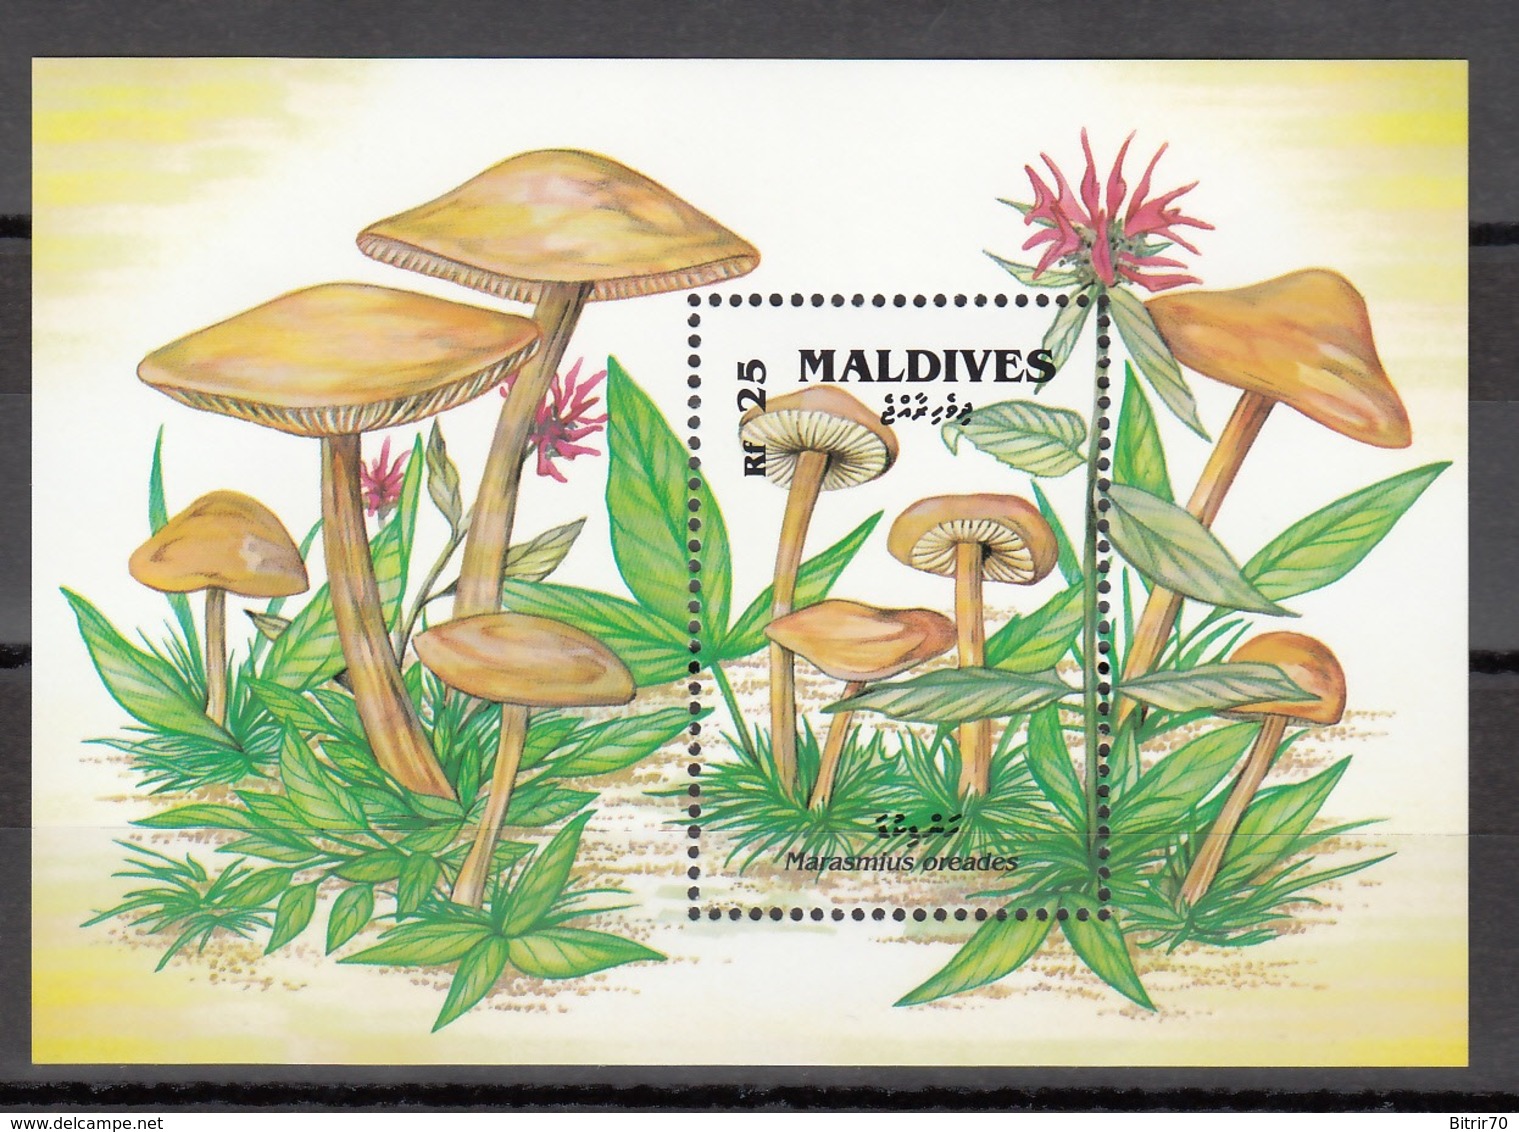 MALDIVES, 1992   Yvert Nº HB 225  MNH, Marasmius Oreades. - Hongos